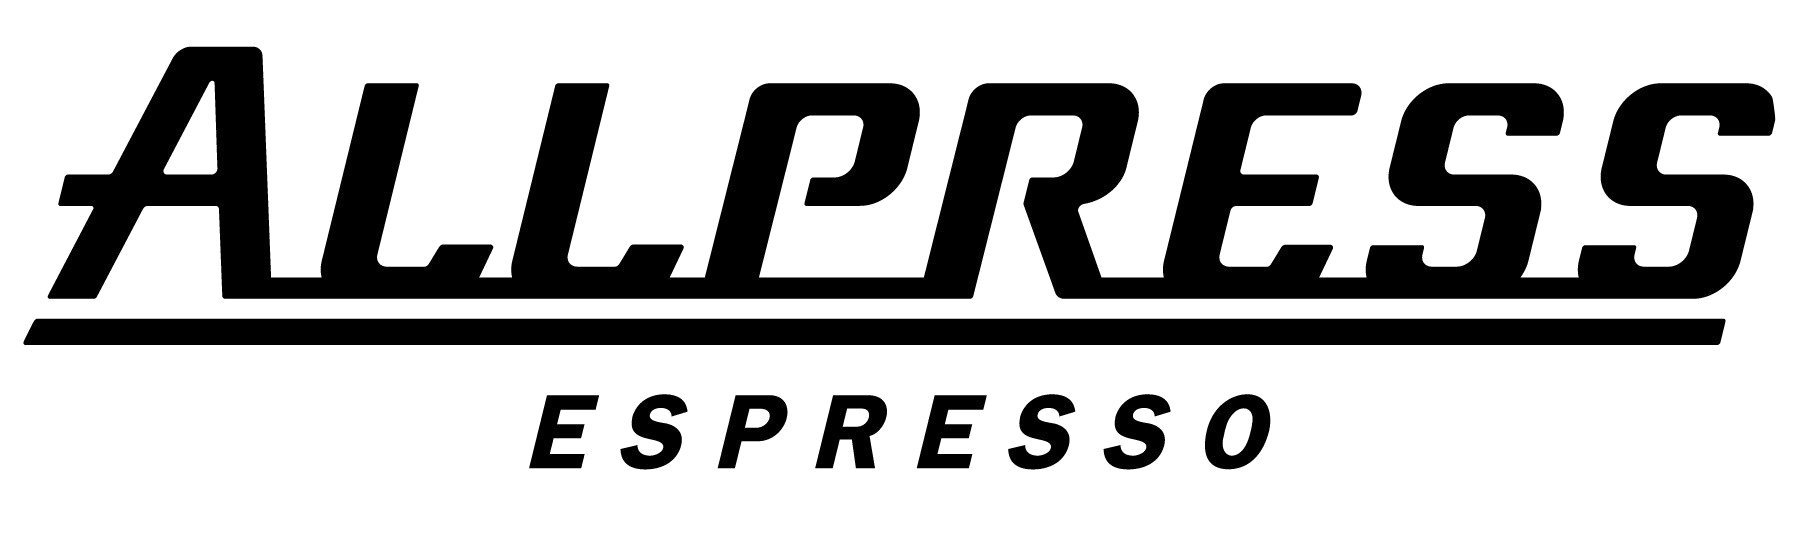 Allpress Logo transparent(High Res).png